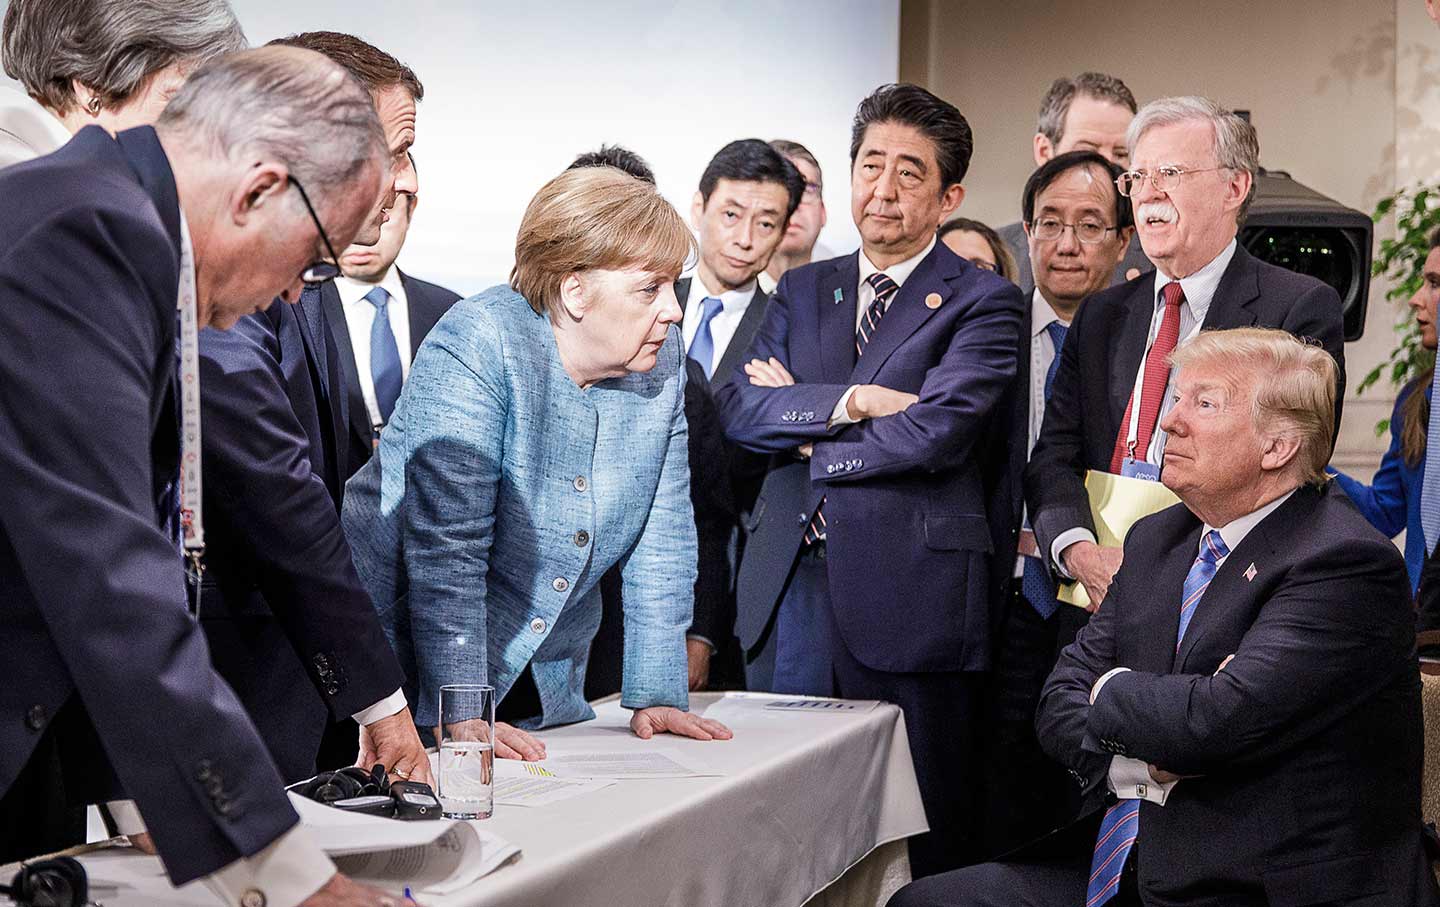 Angela Merkel stares down Trump G-7